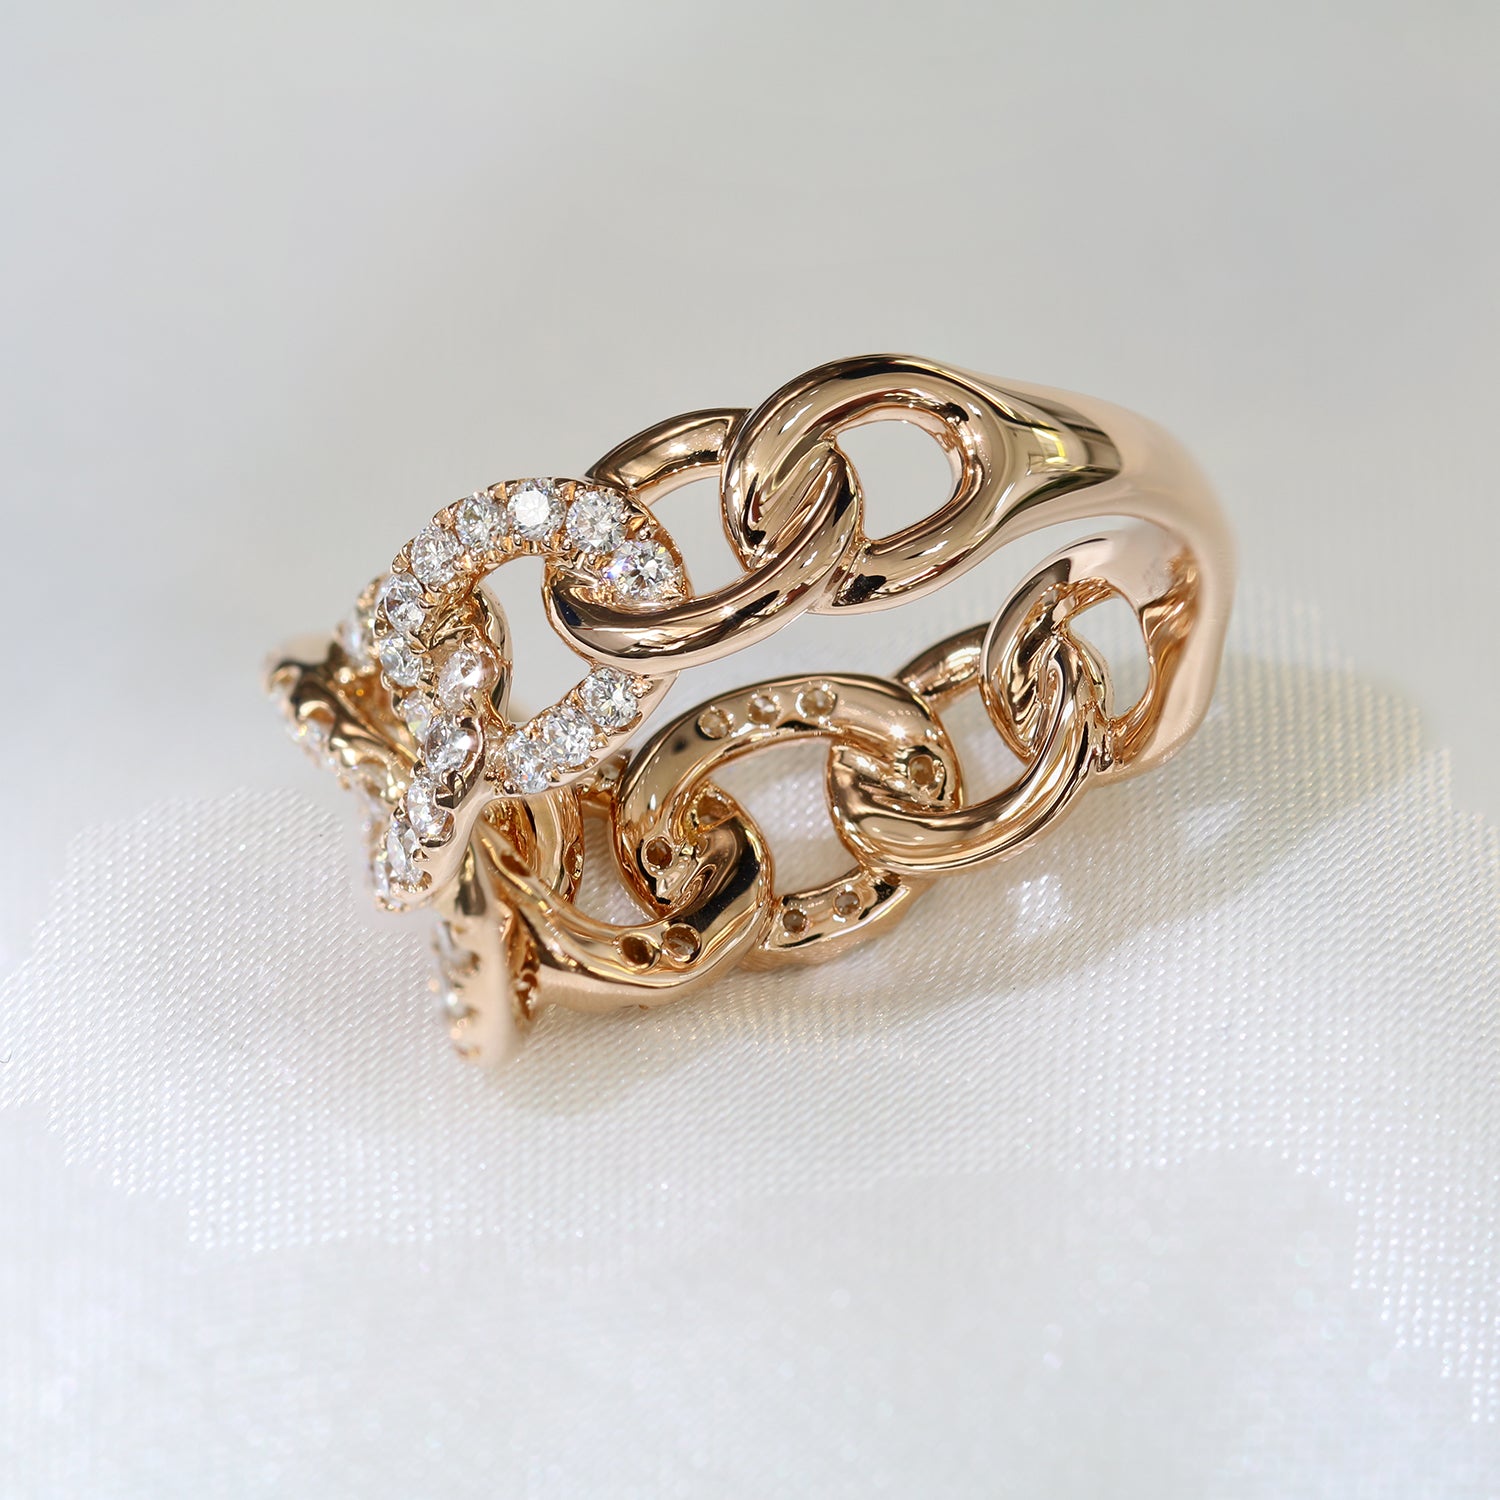 18k玫瑰金鑽石戒指側面  18k Rose Gold Chain Diamond Ring on side view